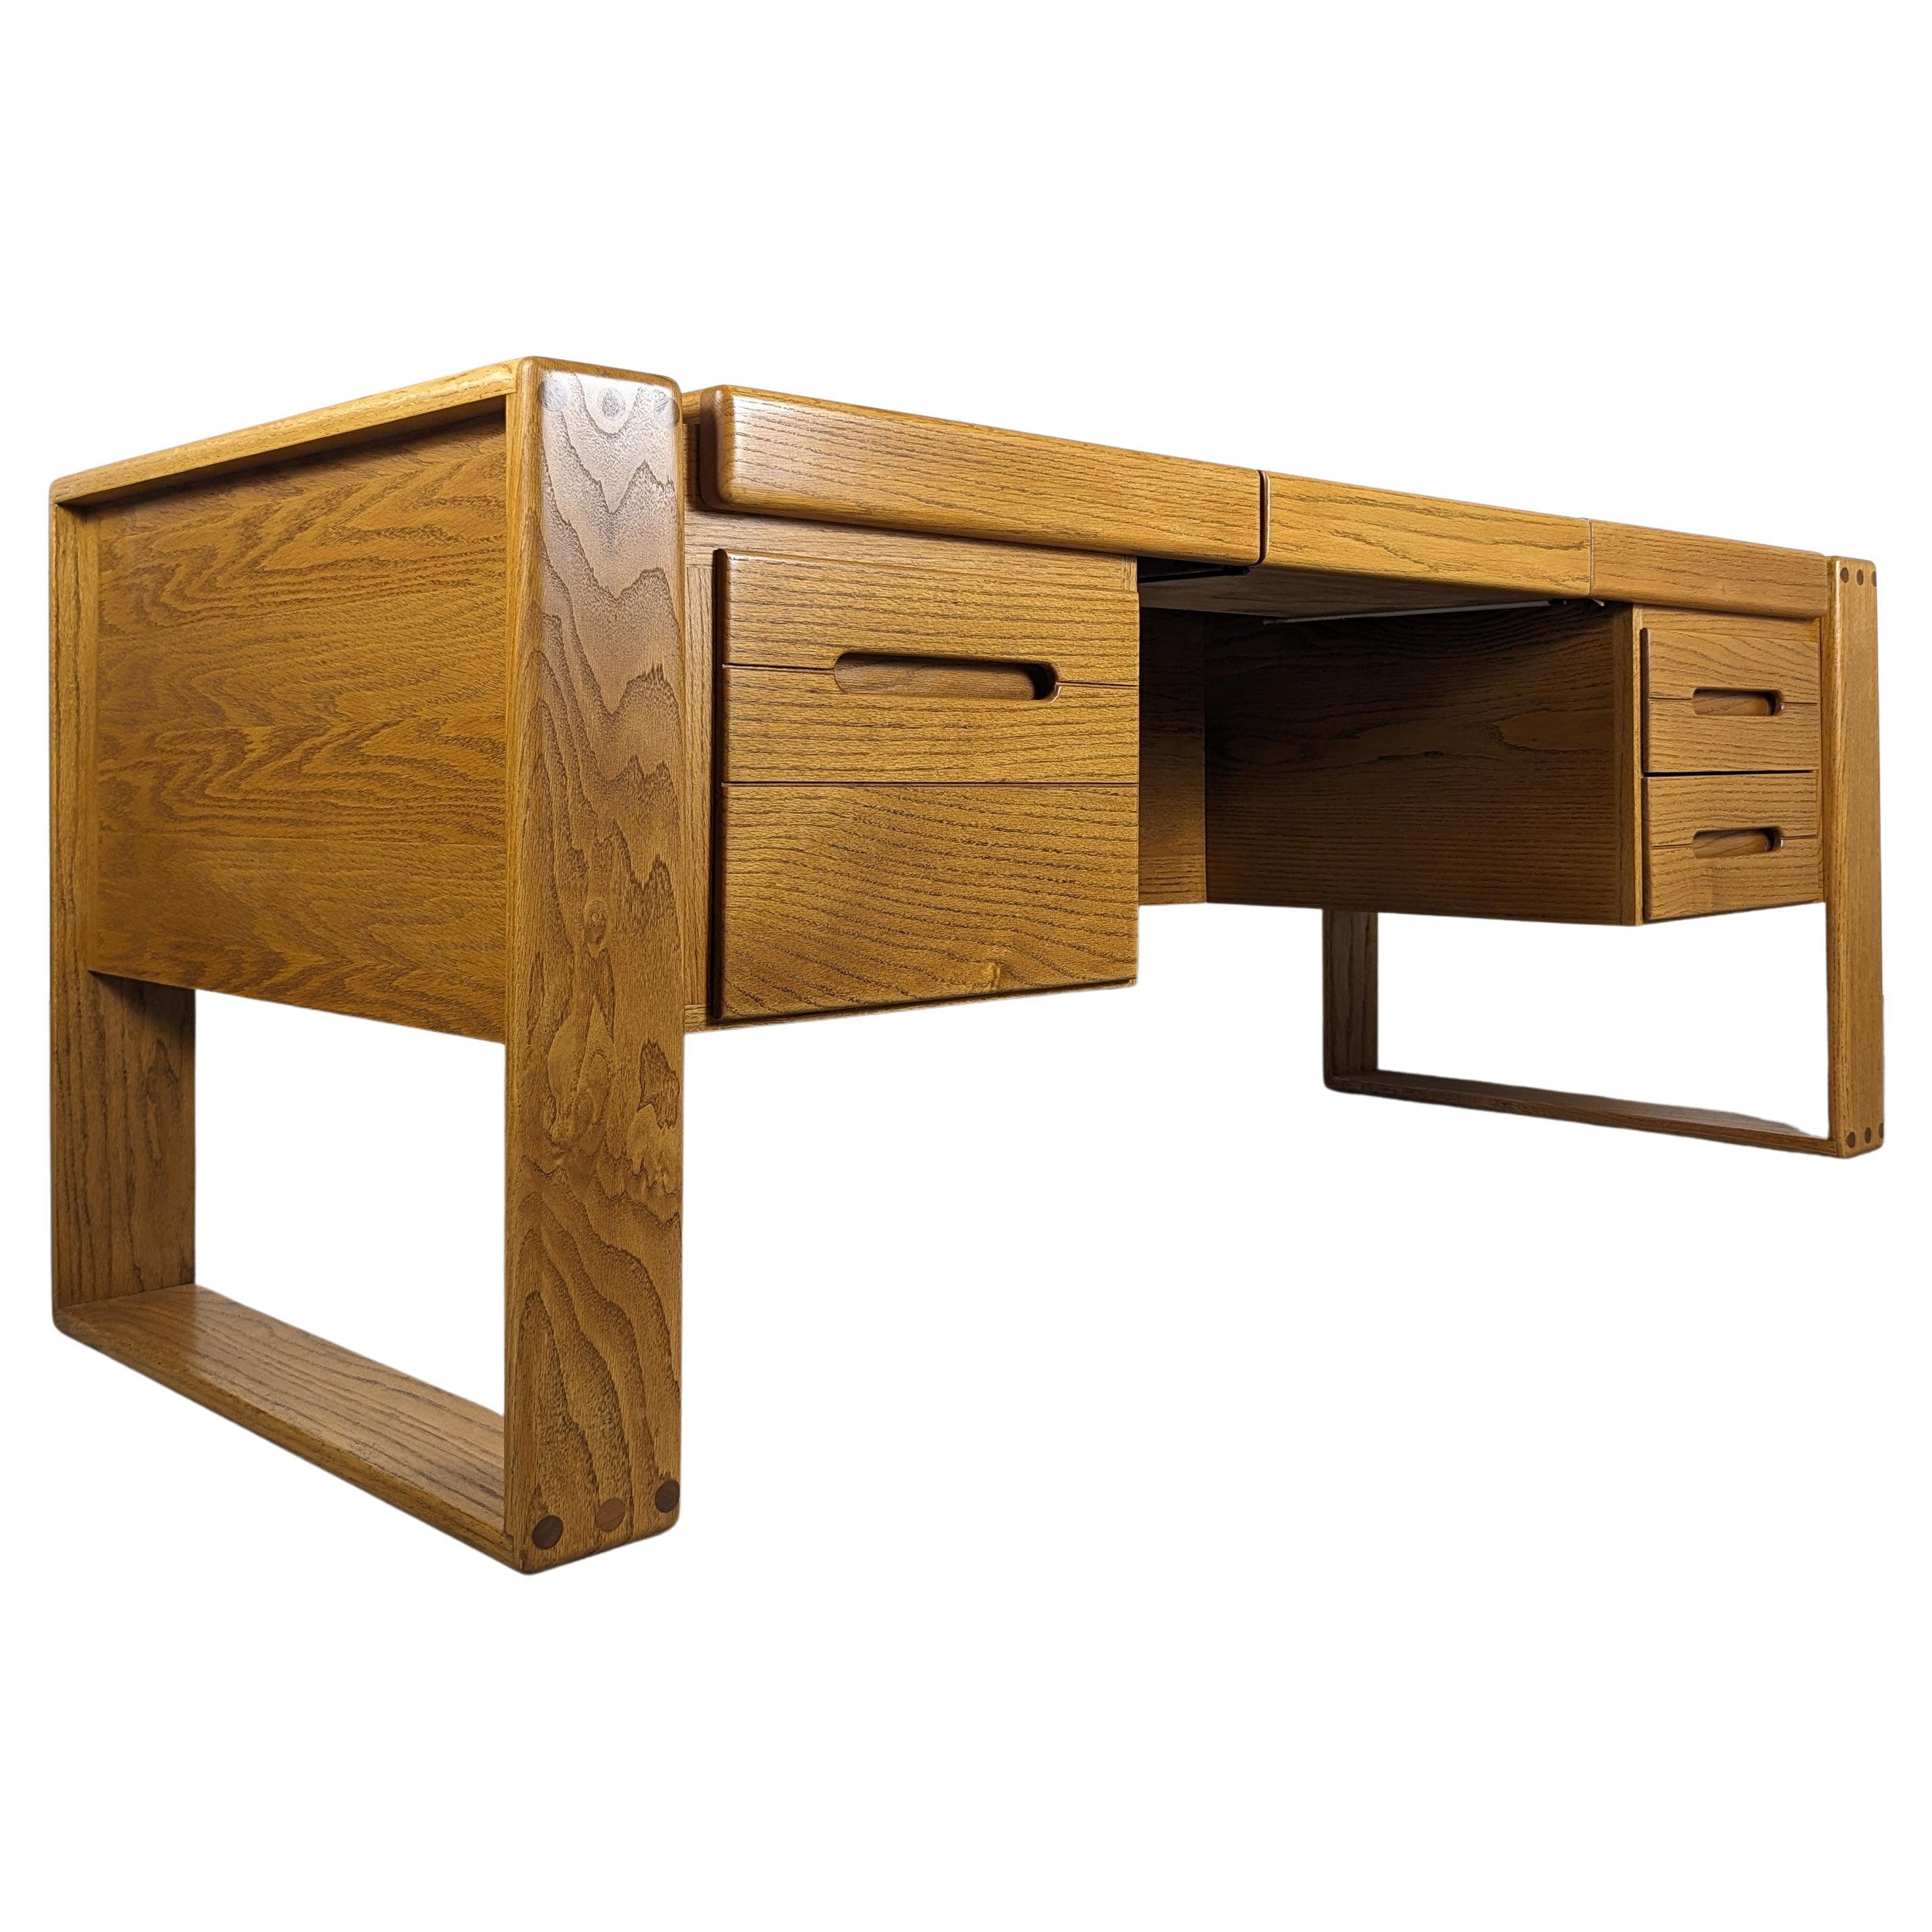 Refinished Lou Hodges Handcrafted Oak Desk for California Design Group, c1980s For Sale